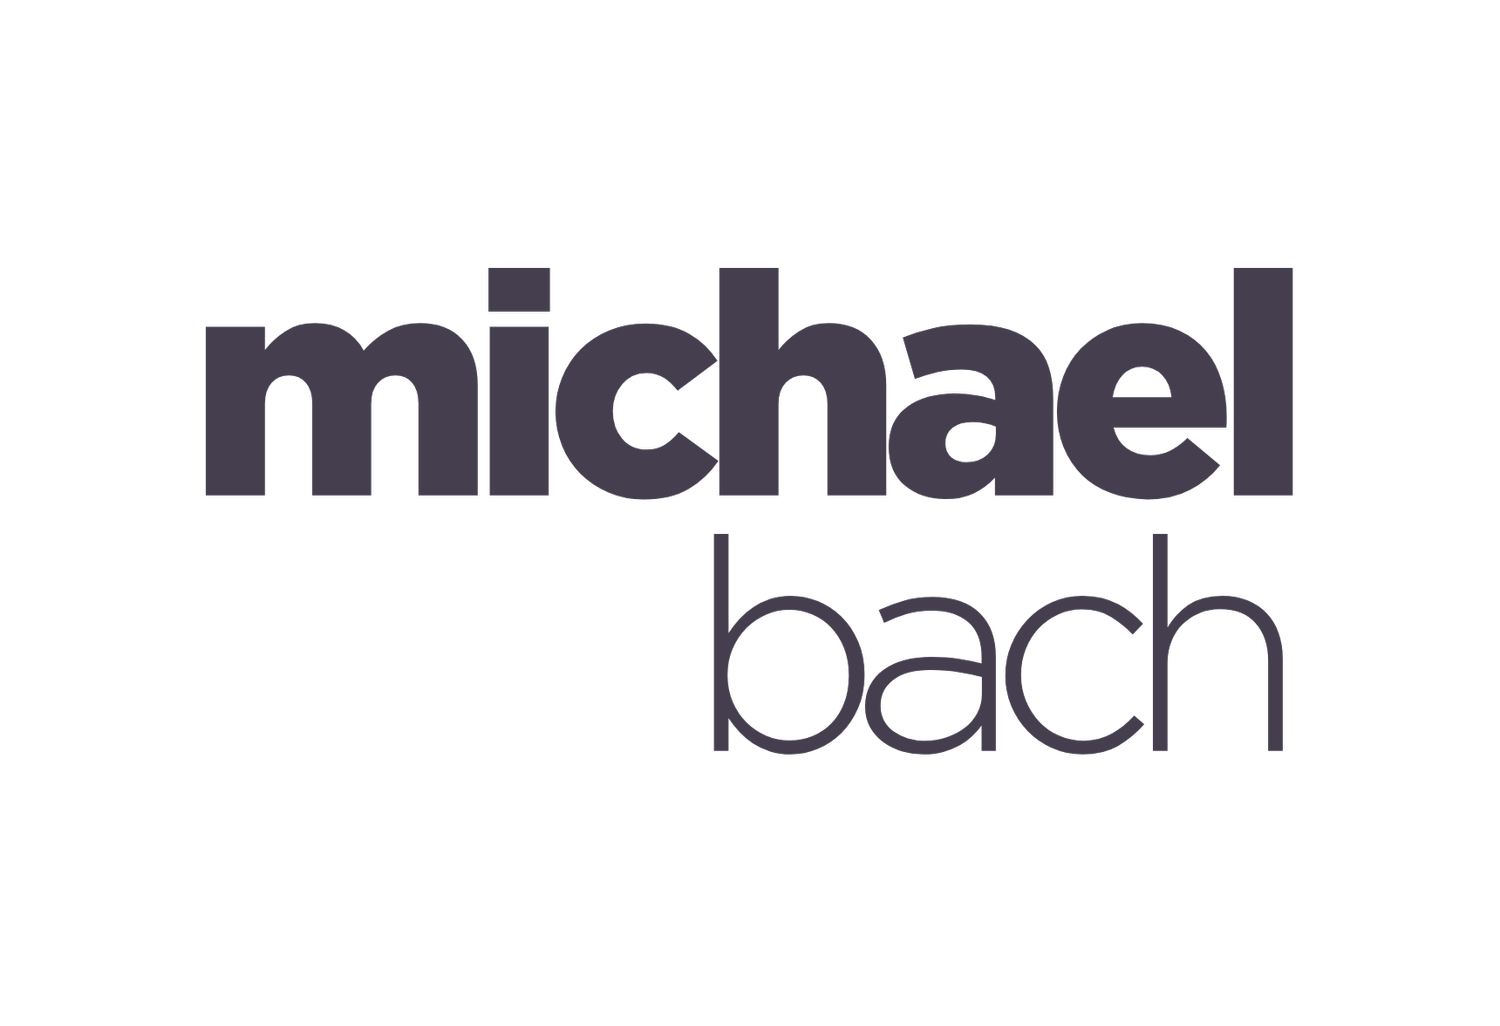 Michael Bach